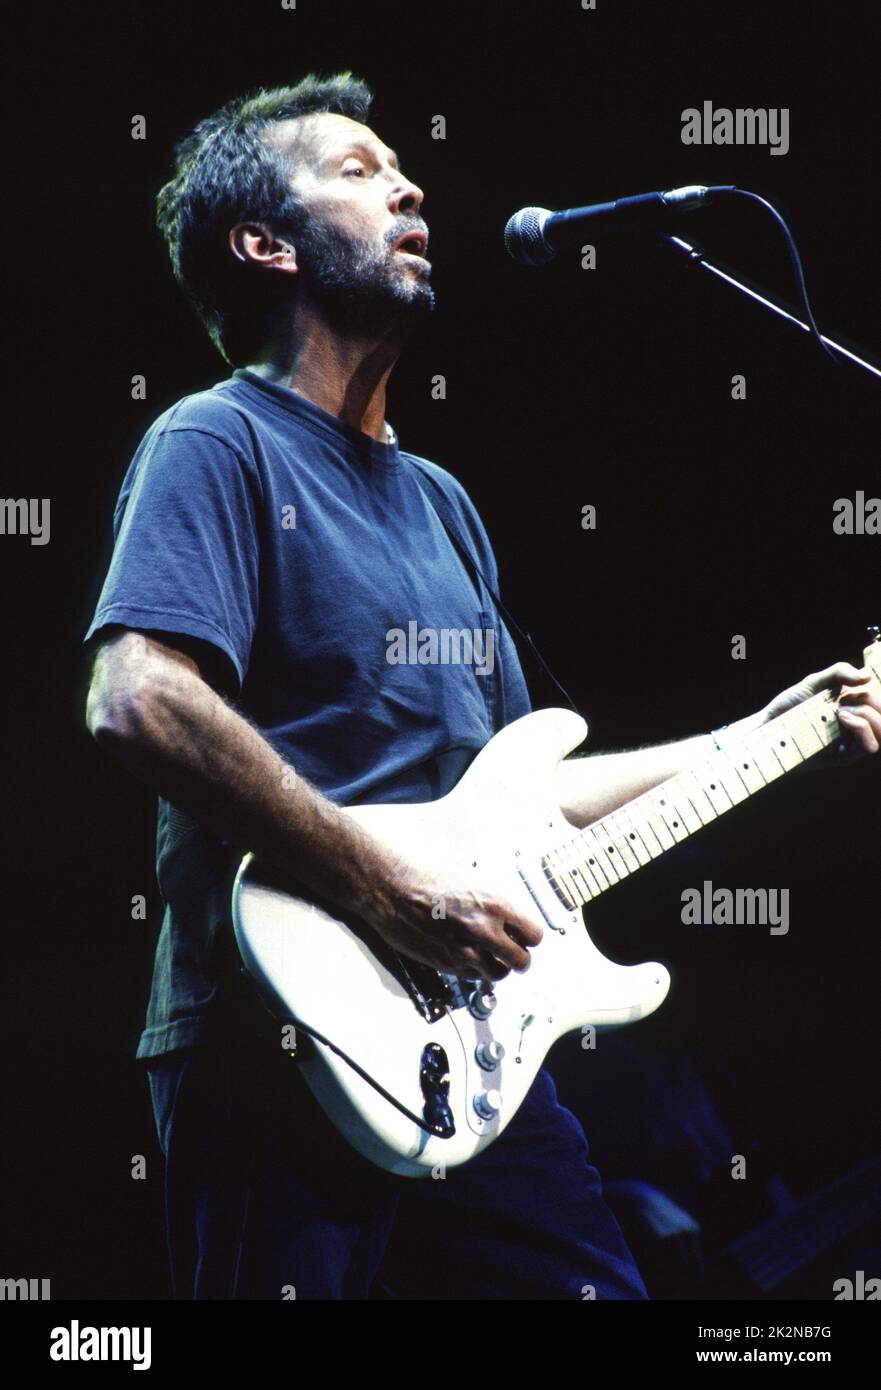 Eric Clapton en concert au Royal Albert Hall, Londres, Angleterre crédit : Mel Longhurst / Performing Arts Images www.performingartsimages.com Banque D'Images